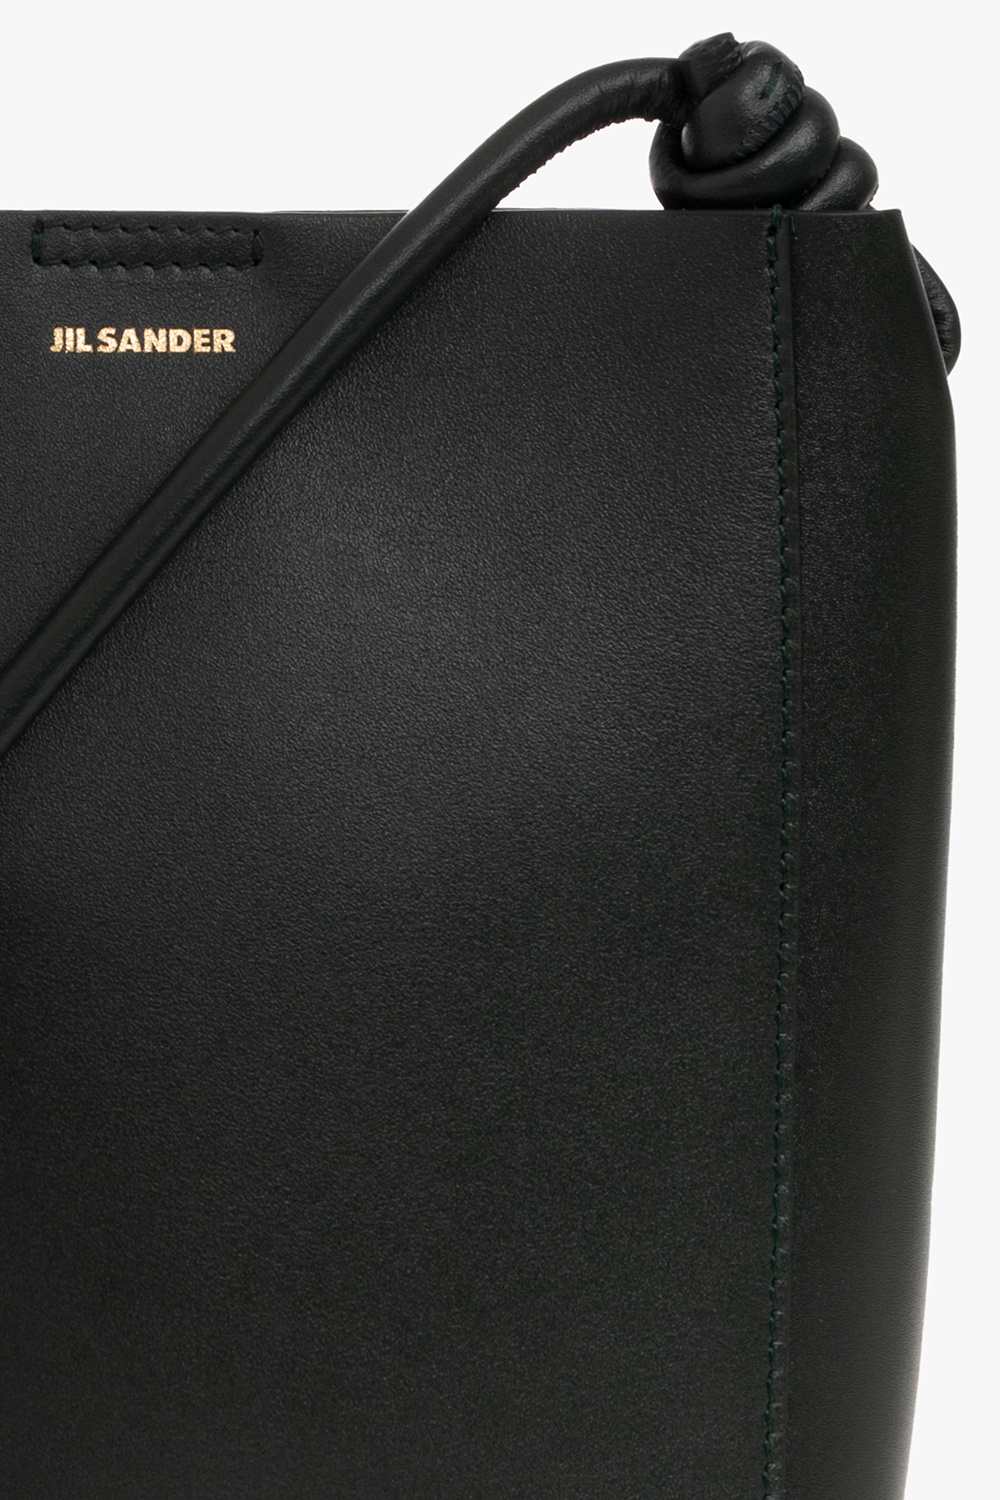 JIL SANDER ‘Giro’ shoulder bag